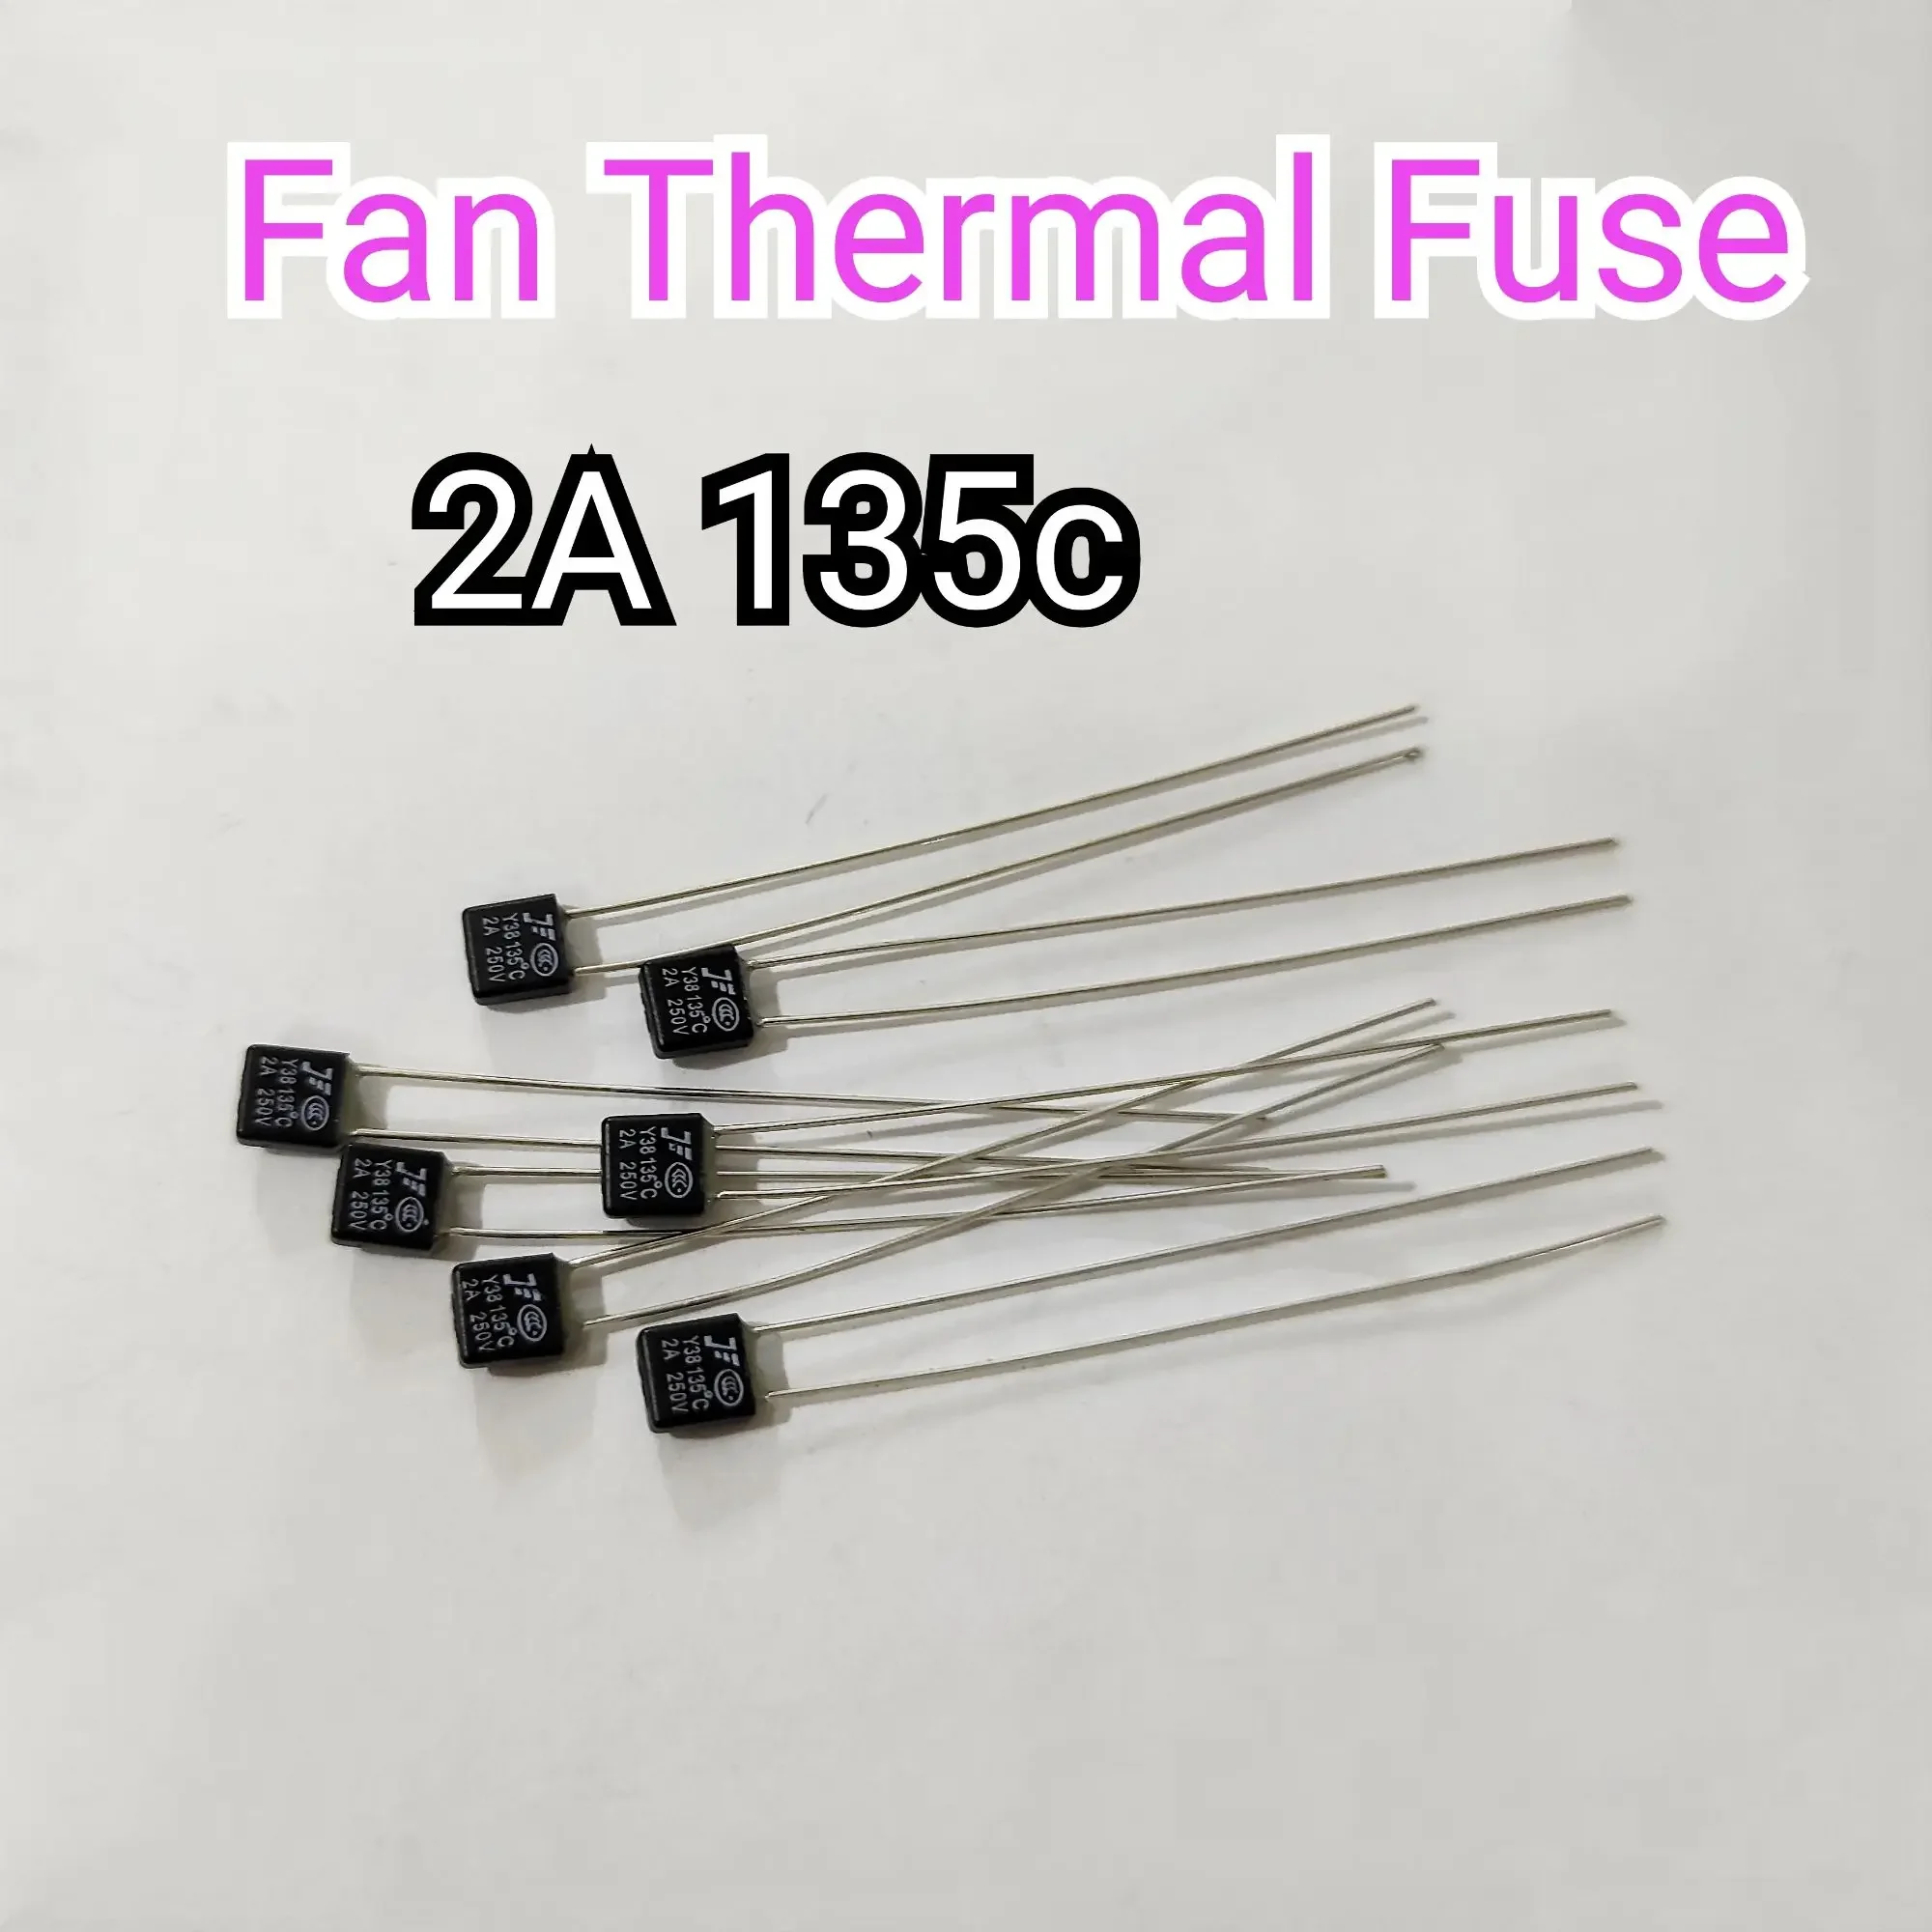 1 Biji 2A 135C Fan Thermal Fuse fius kipas 2A 135C